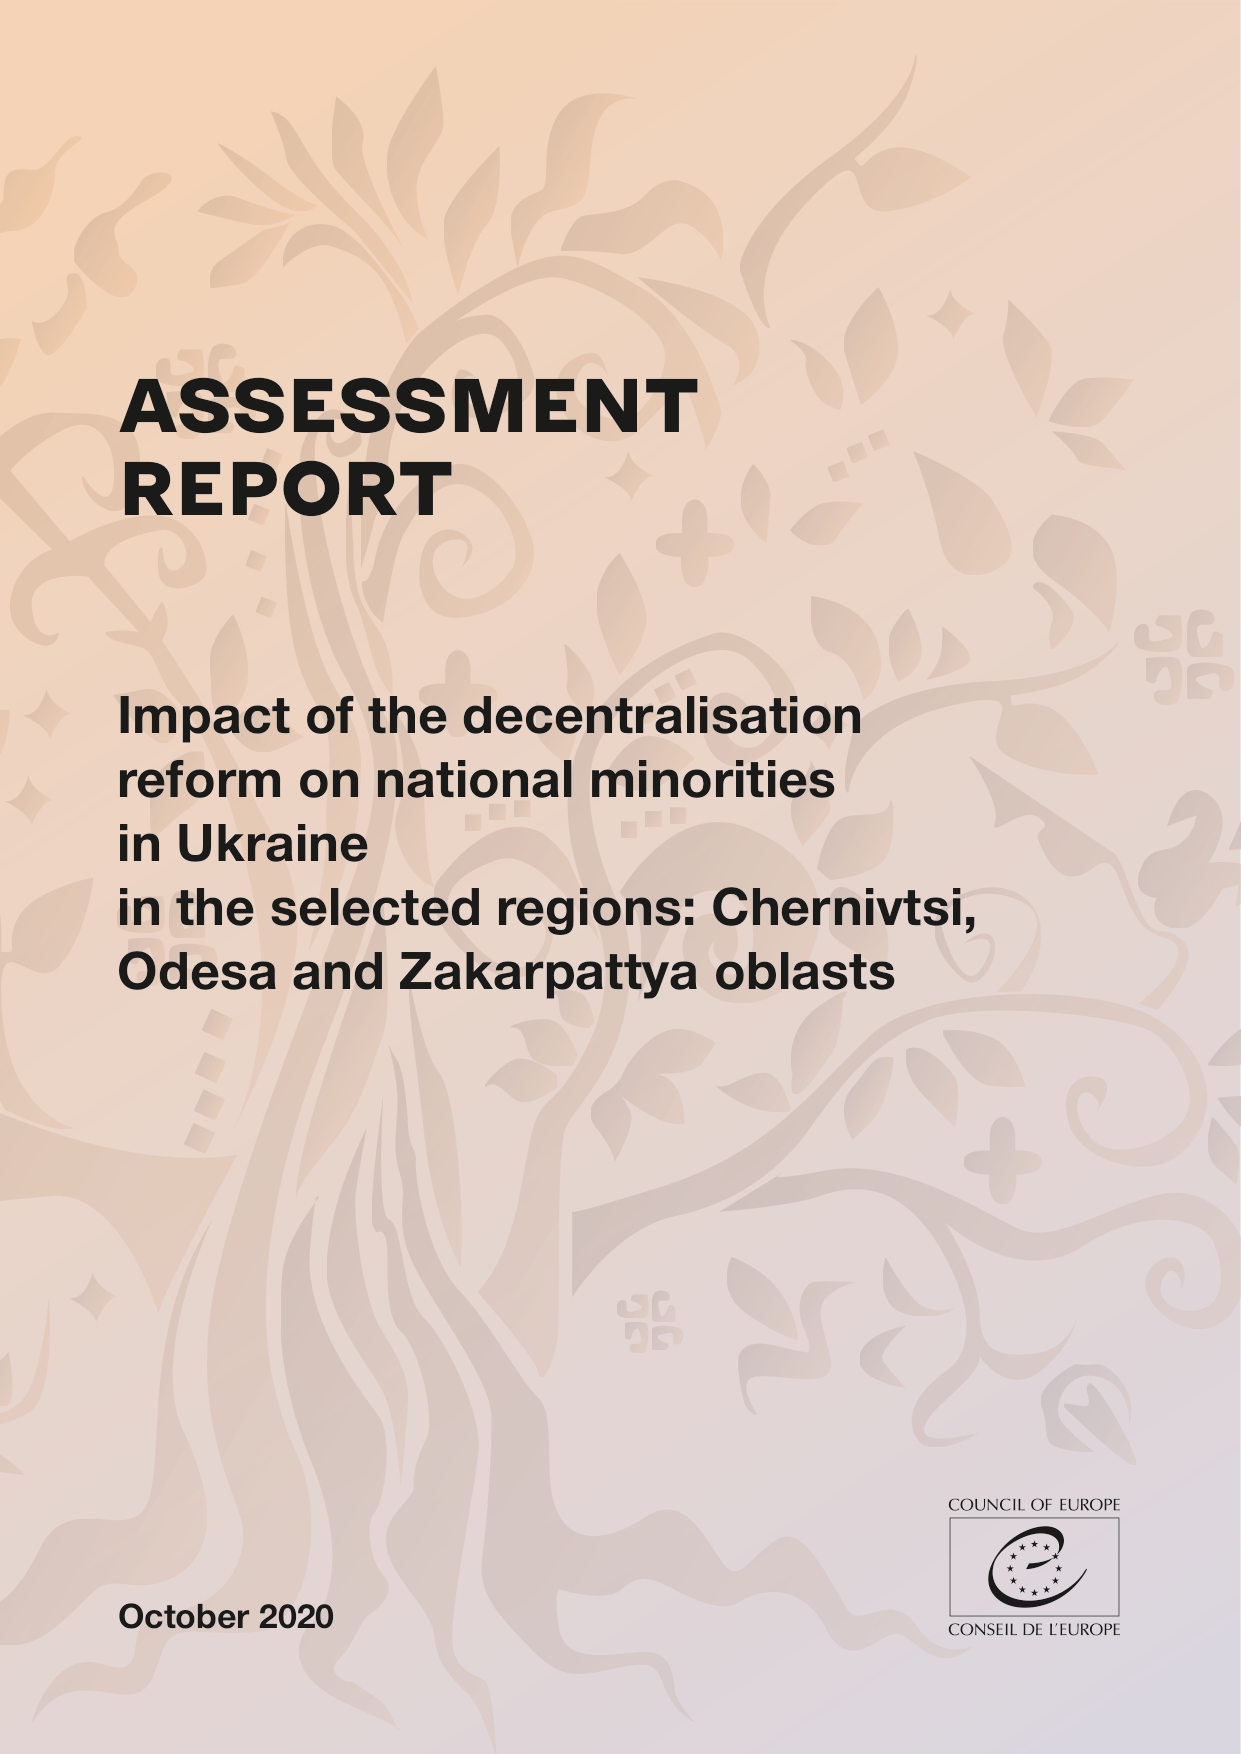 Assessment report regarding the impact of the decentralization reform on national minorities in Ukraine in the selected regions: Chernivtsi, Odesa and Zakarpattya oblasts